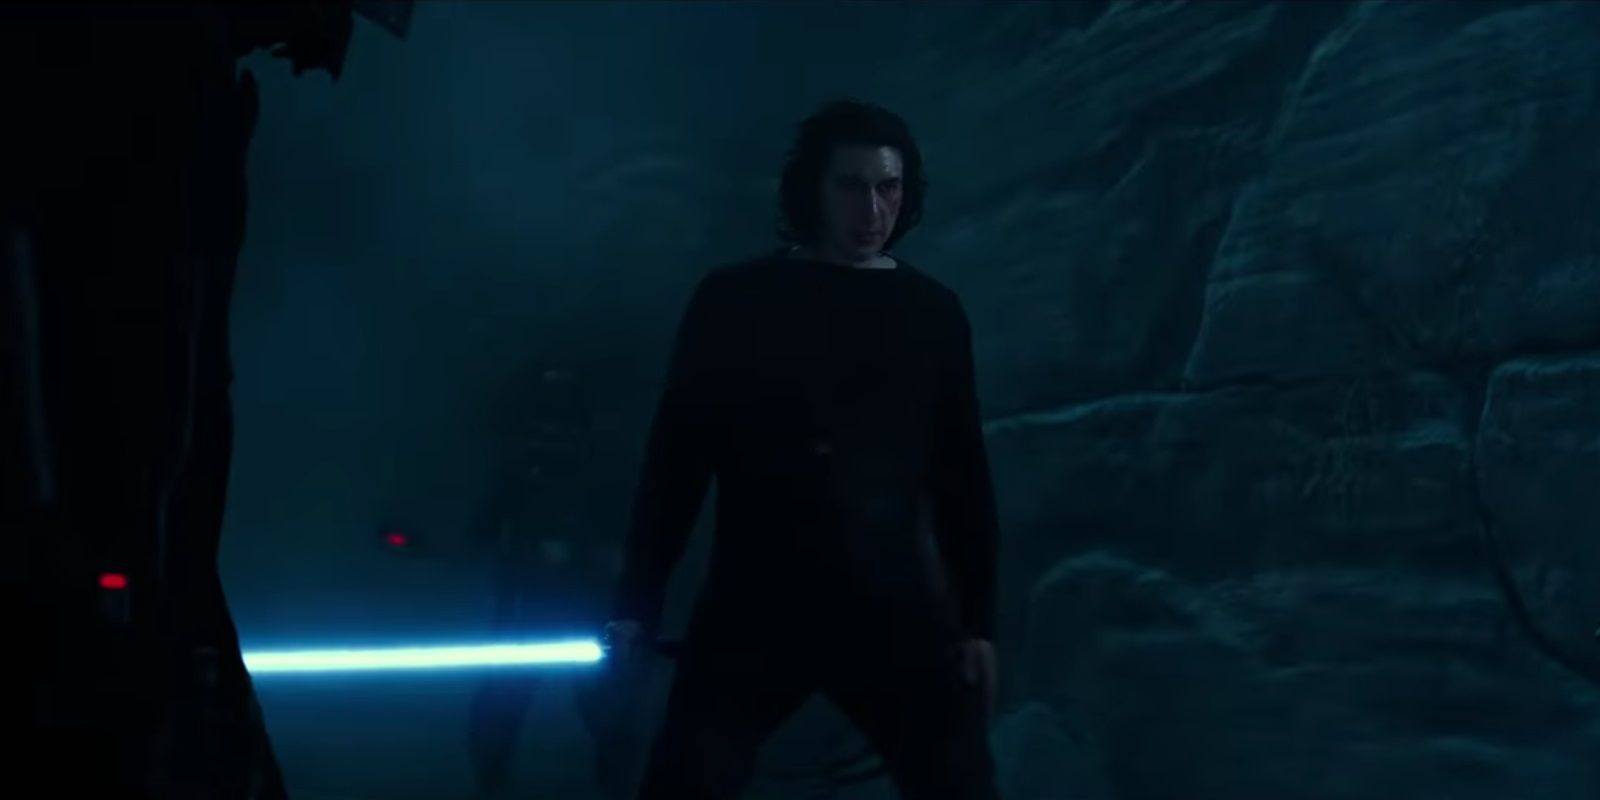 Kylo Ren/Ben Solo battles the Knights of Ren in Star Wars: The Rise of Skywalker